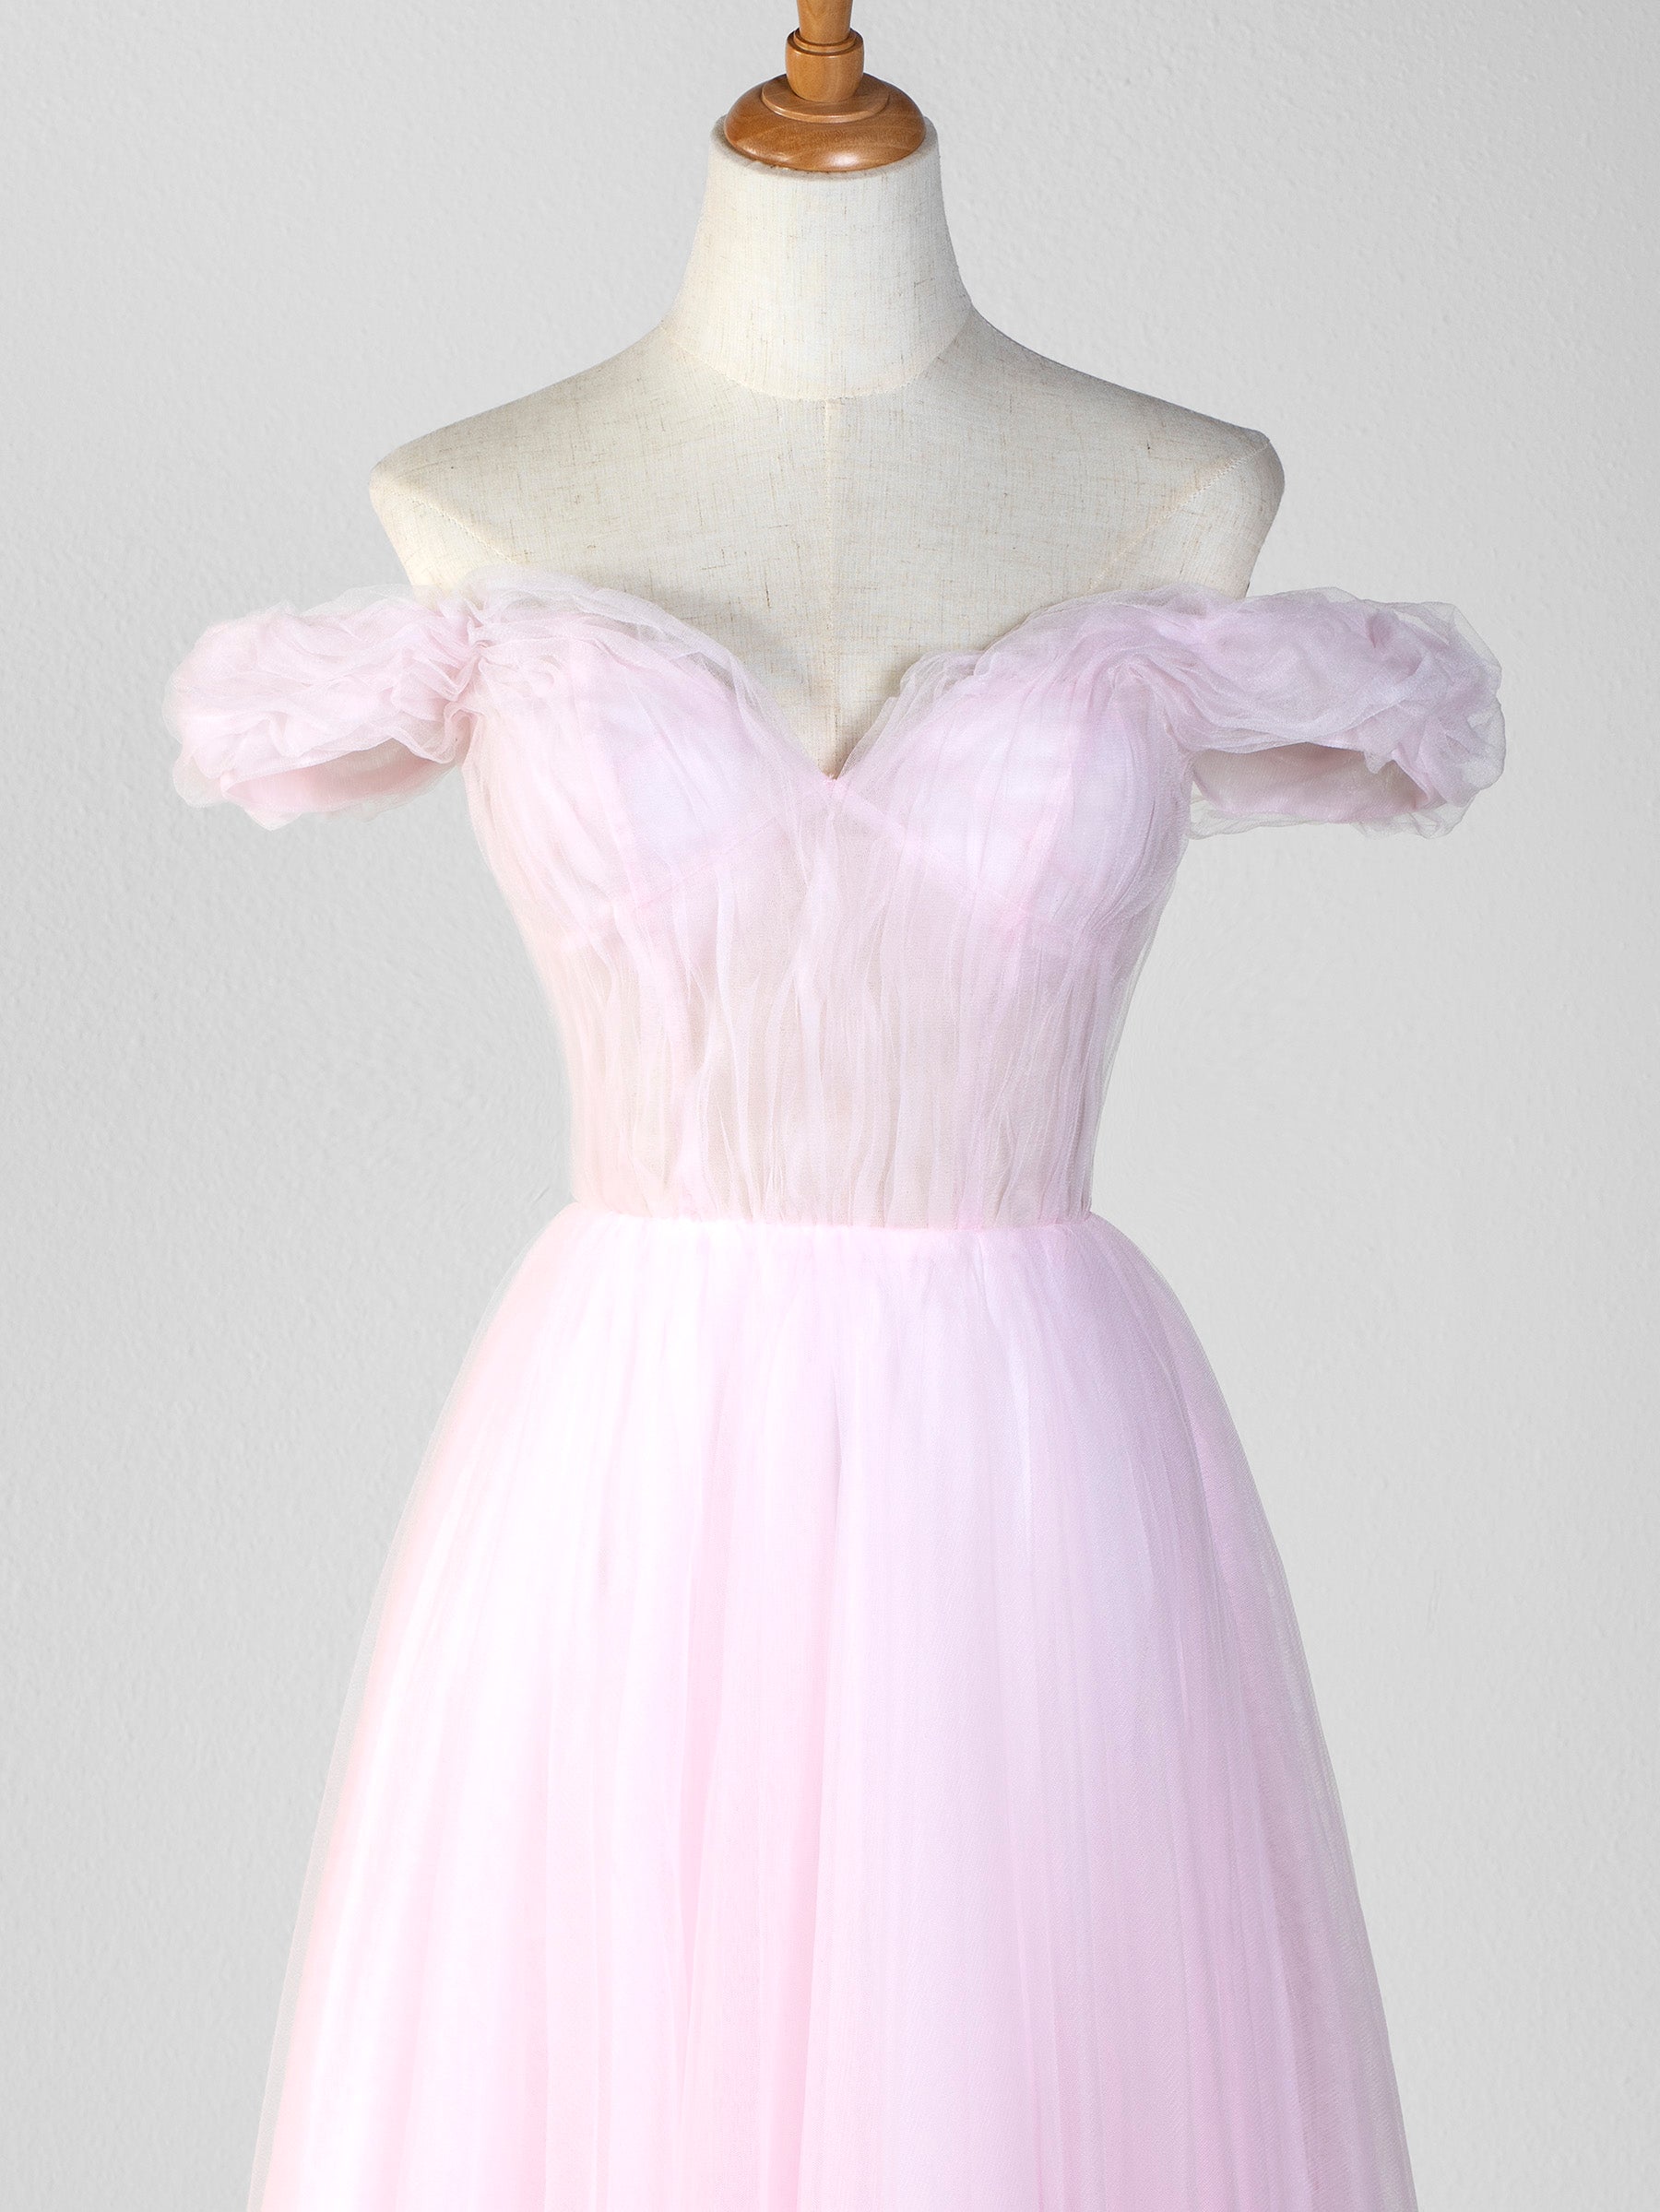 Sweetheart Neck Off the Shoulder Tea Length Tulle Prom Dress